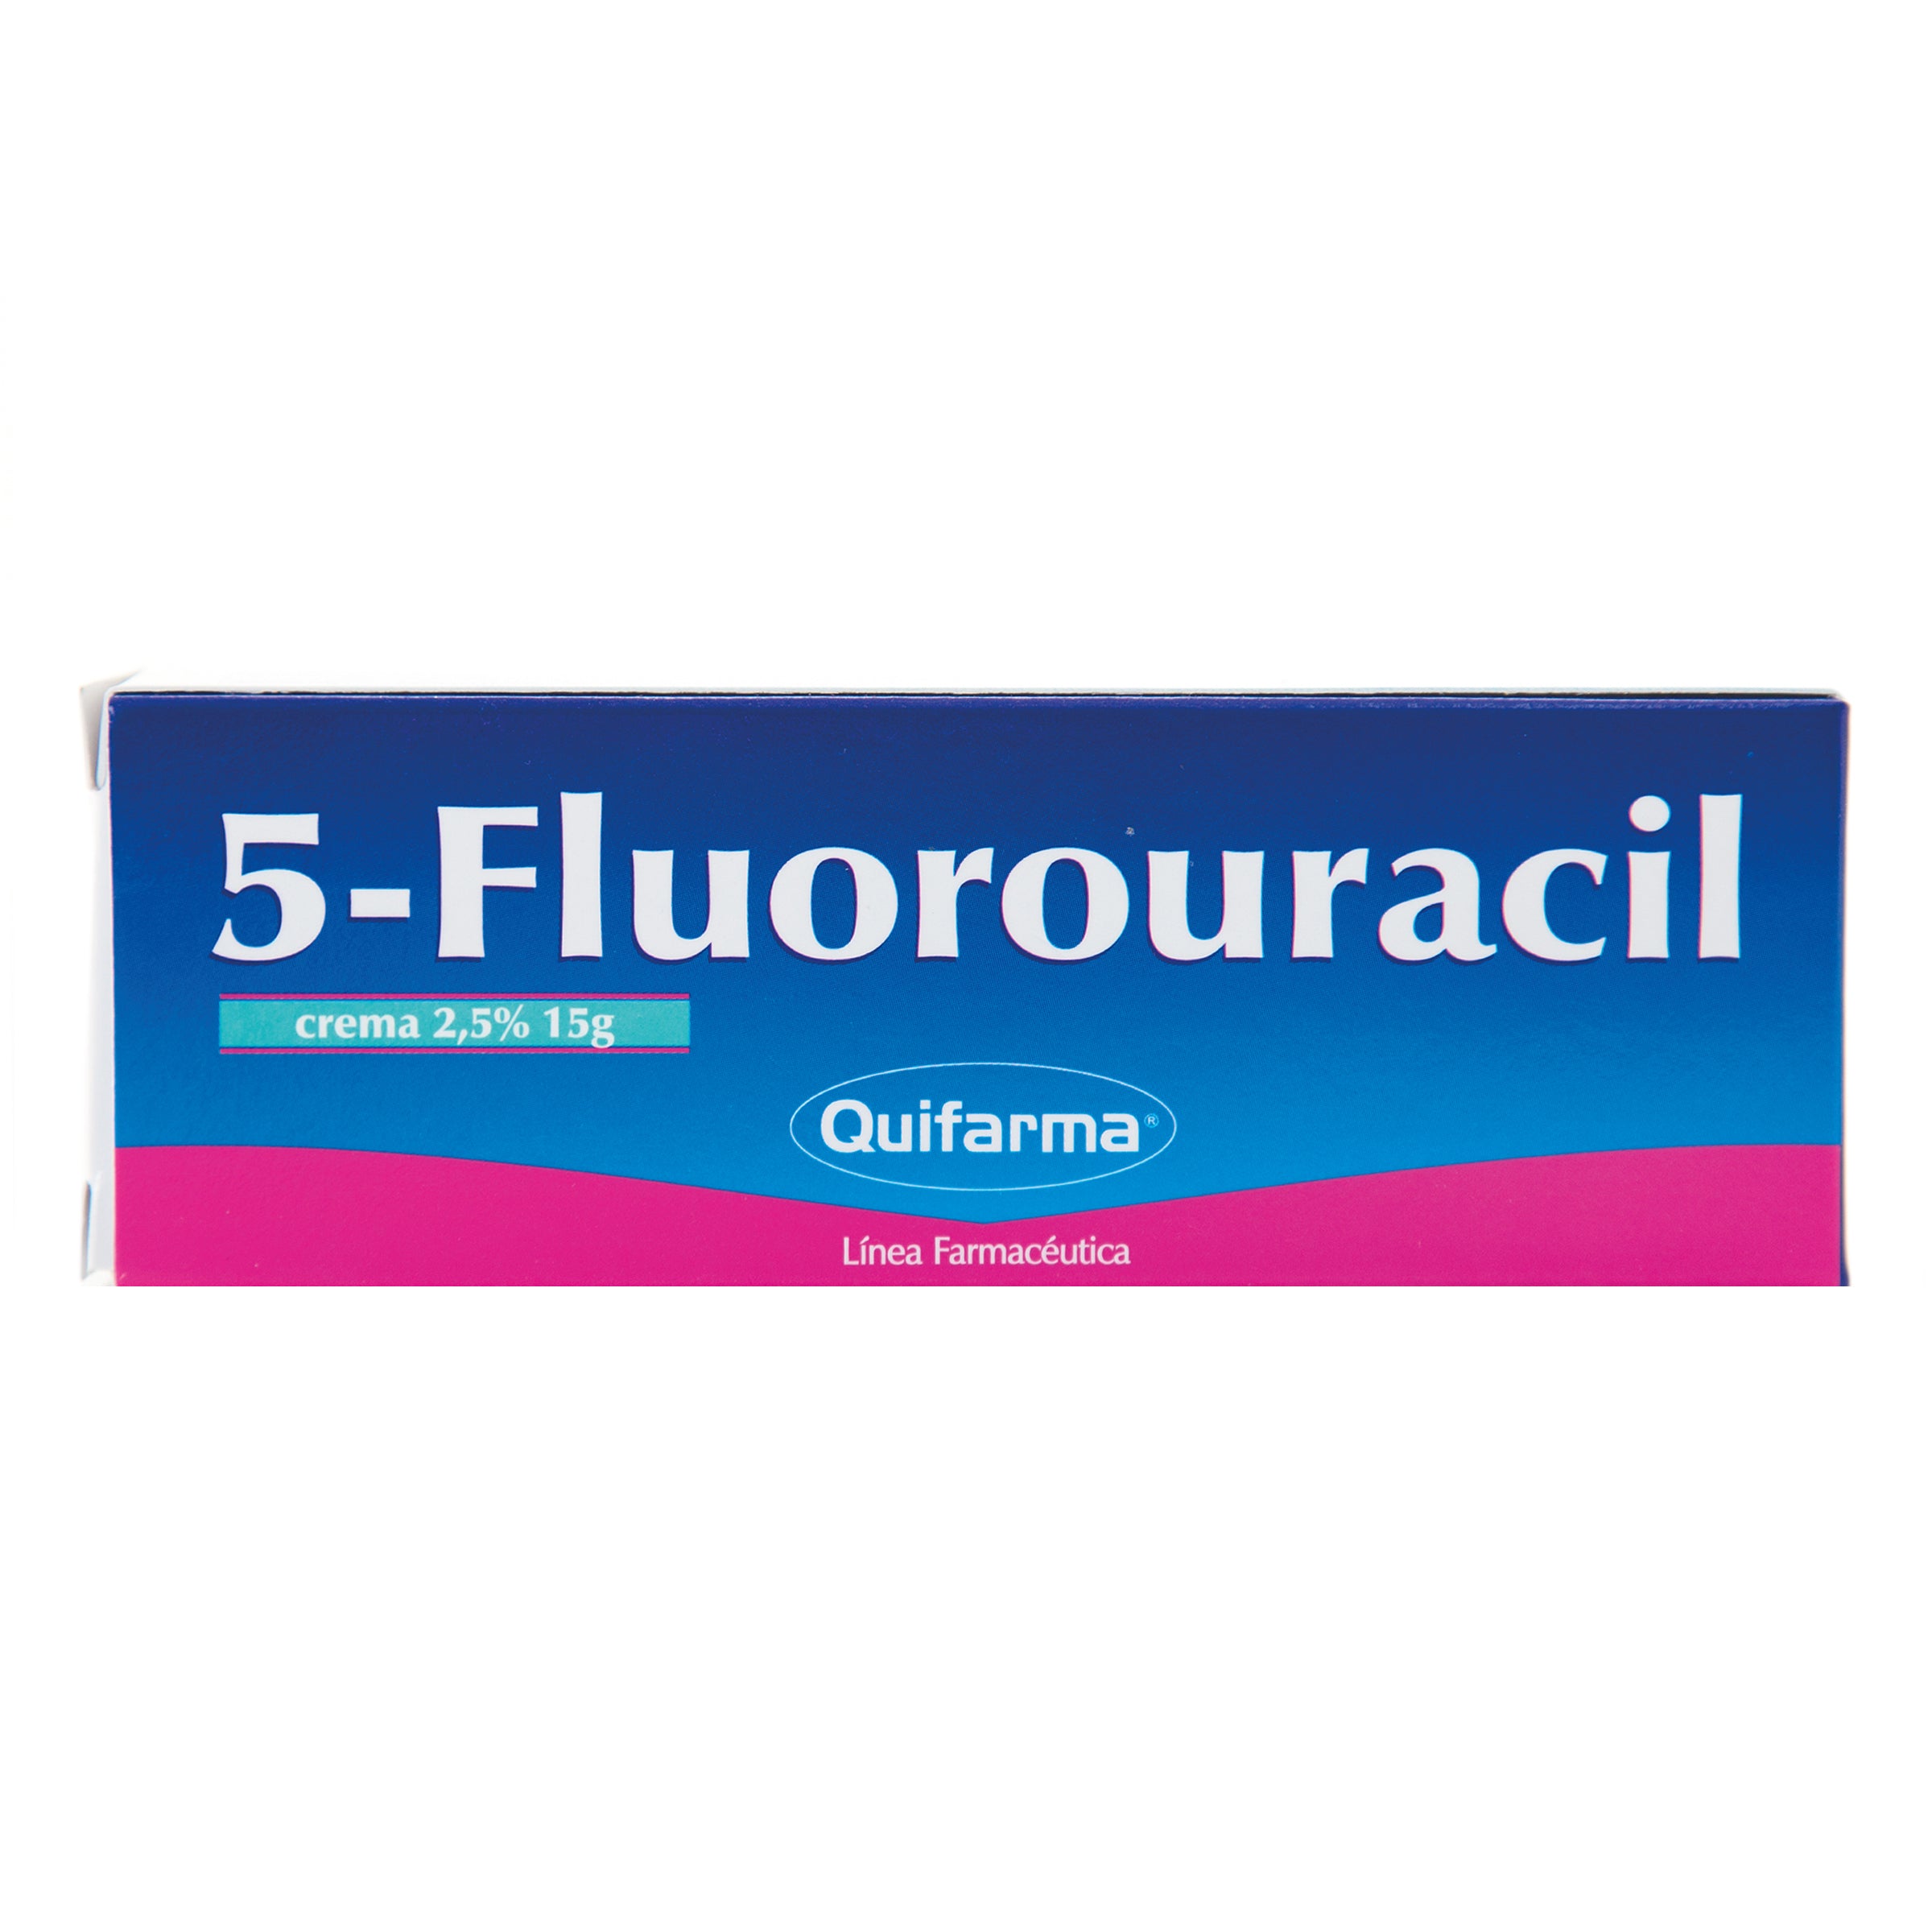 5 - FLUOROURACIL 2.5% CREMA 15 GR